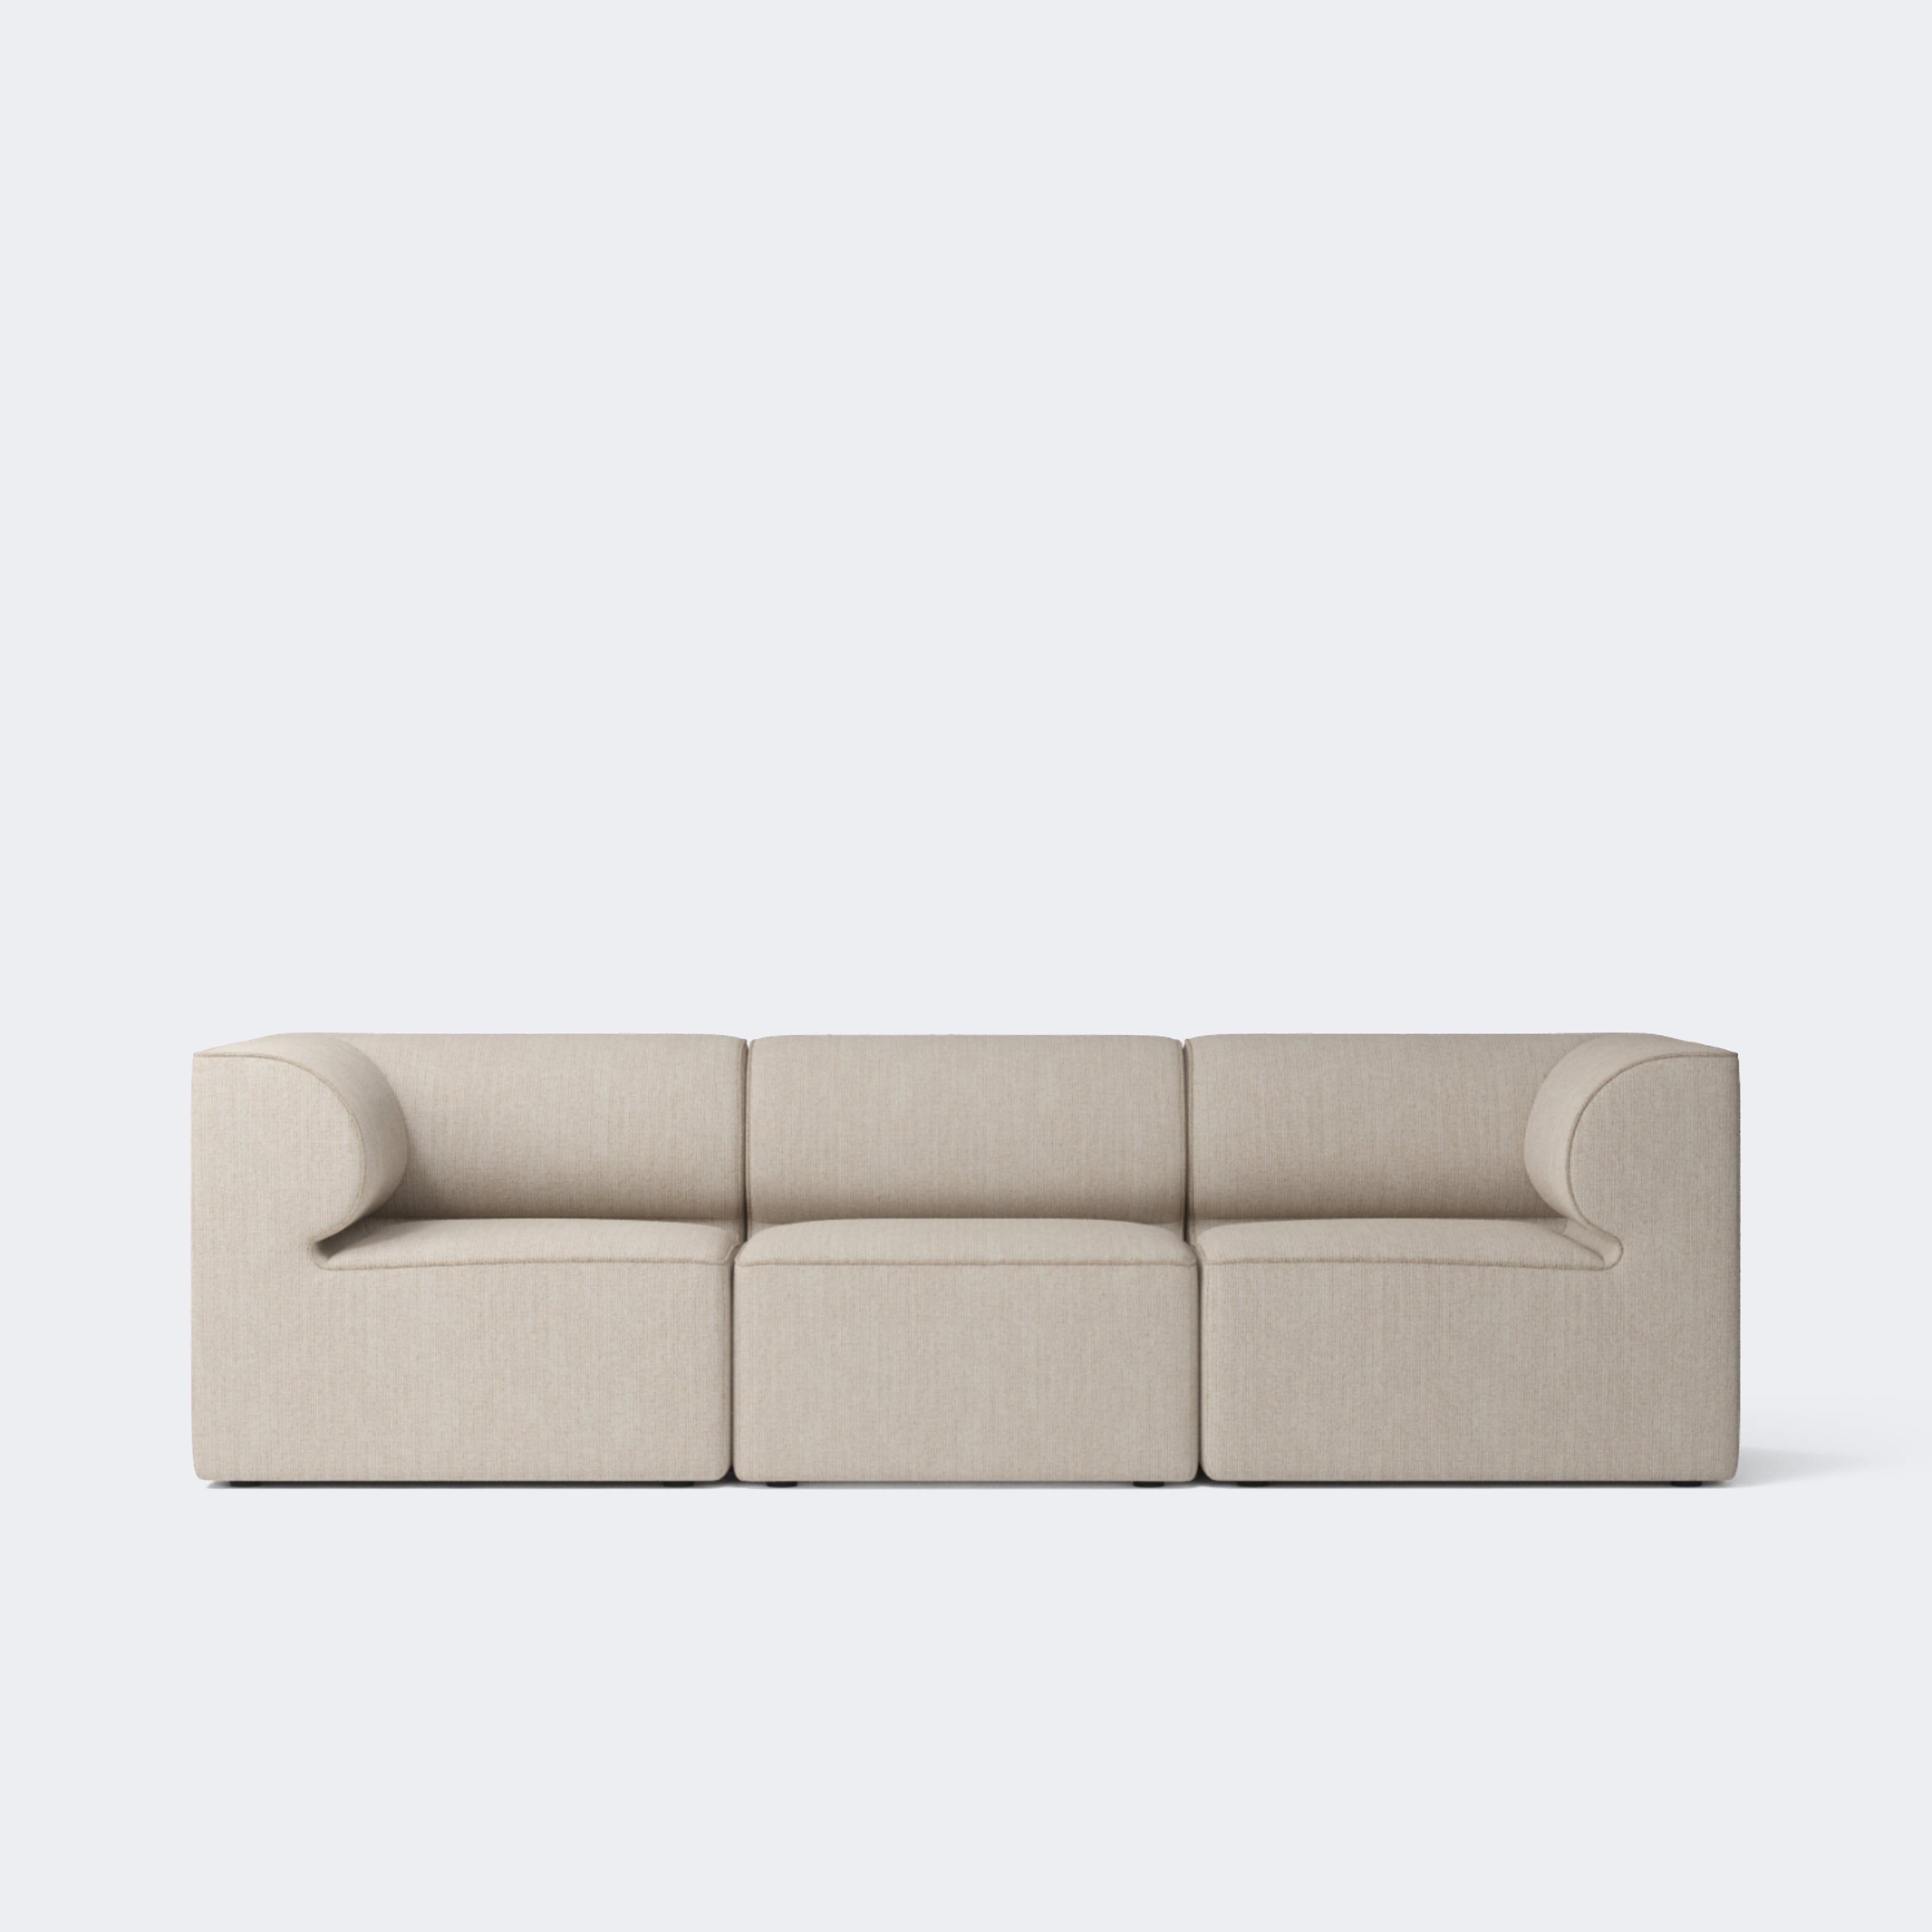 Audo Copenhagen Eave Sectional Sofa, 3-Seater Made To Order 202 / SAVANNA - KANSO